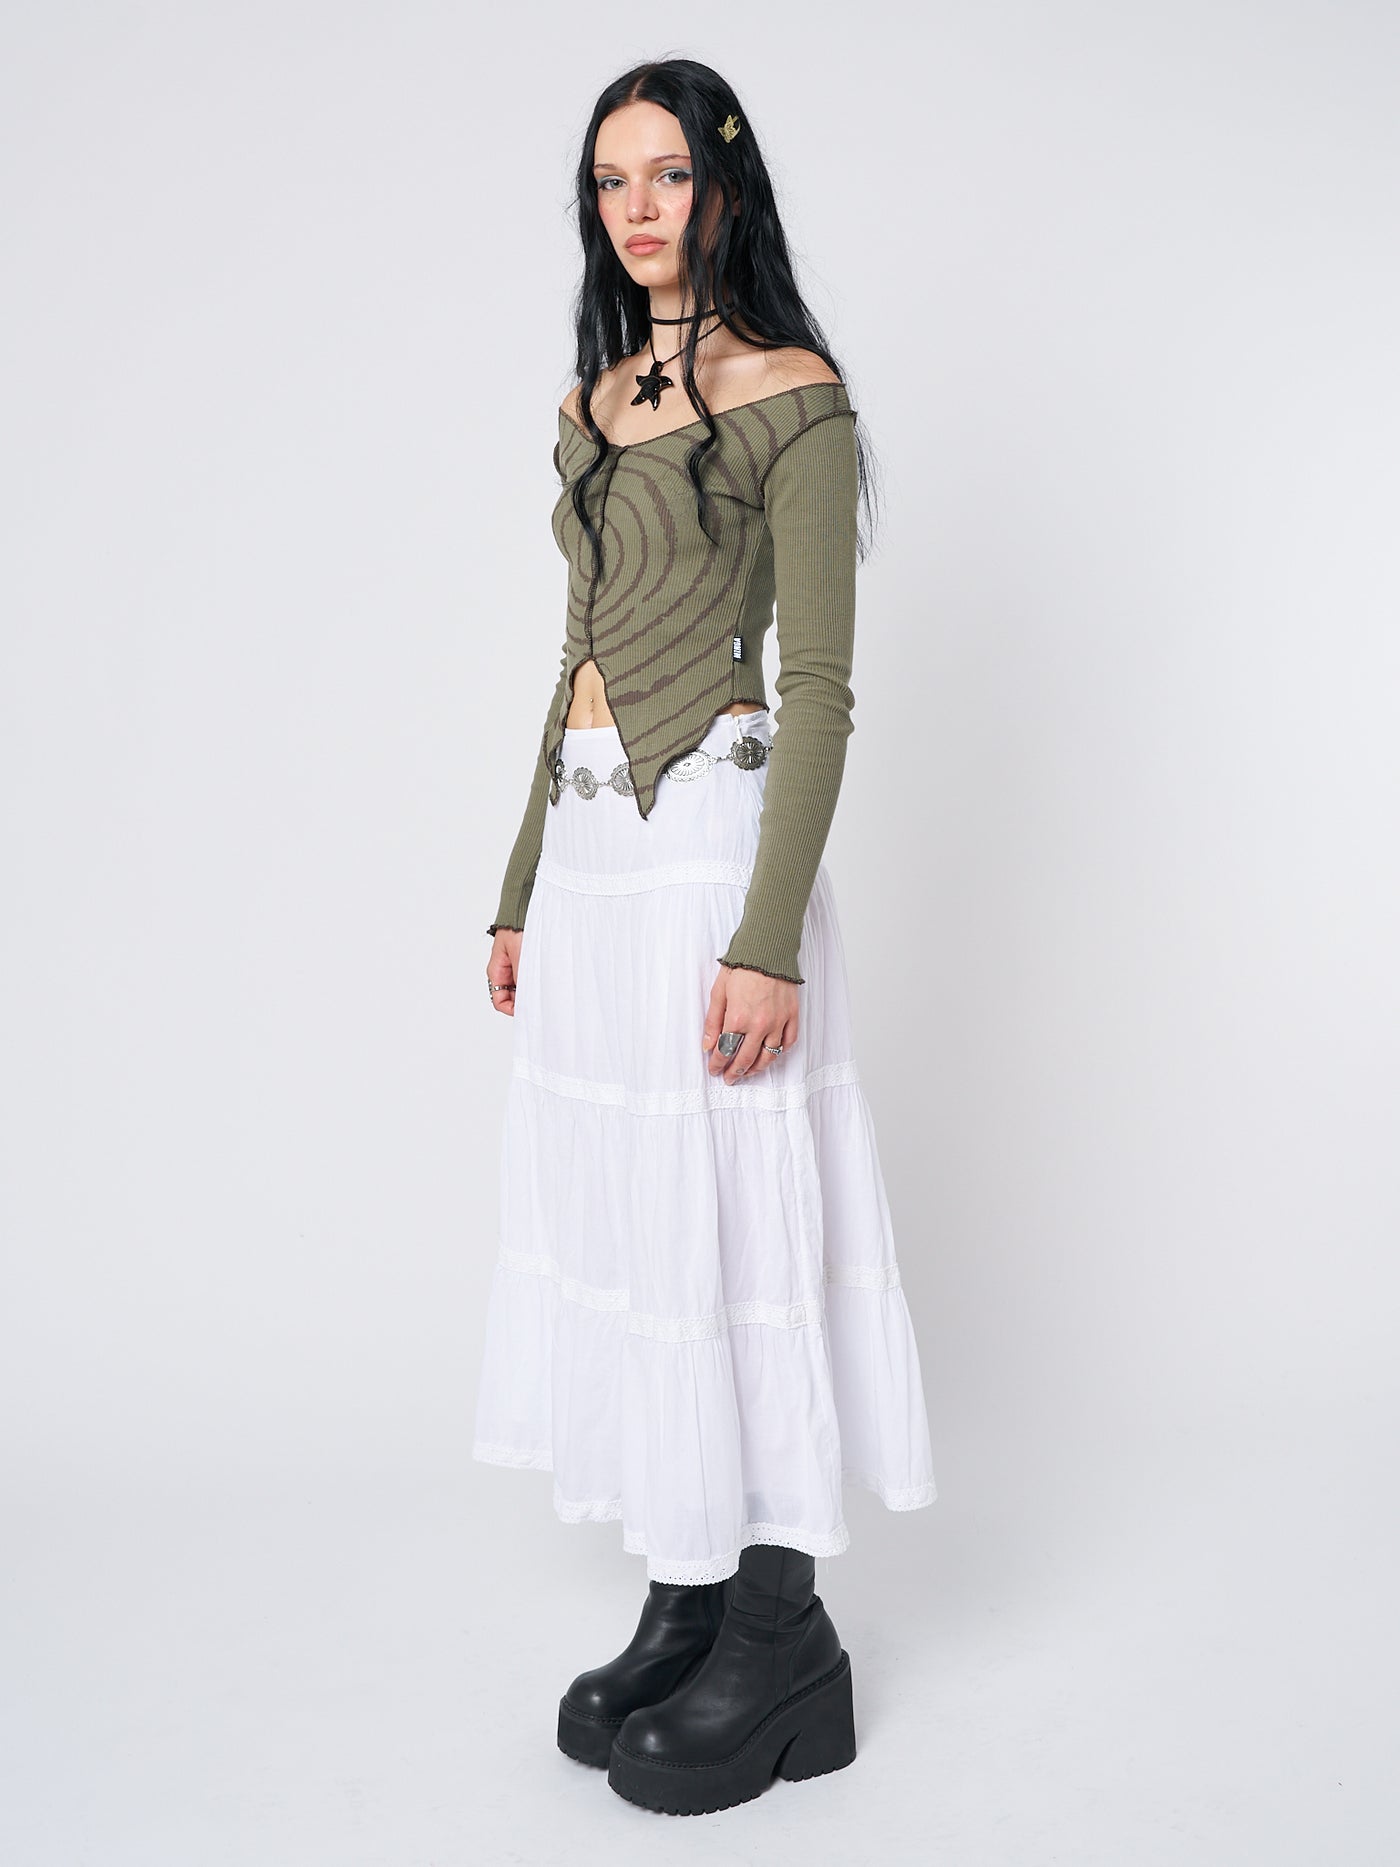 Snow White Ruffle Lace Maxi Skirt - Minga EU